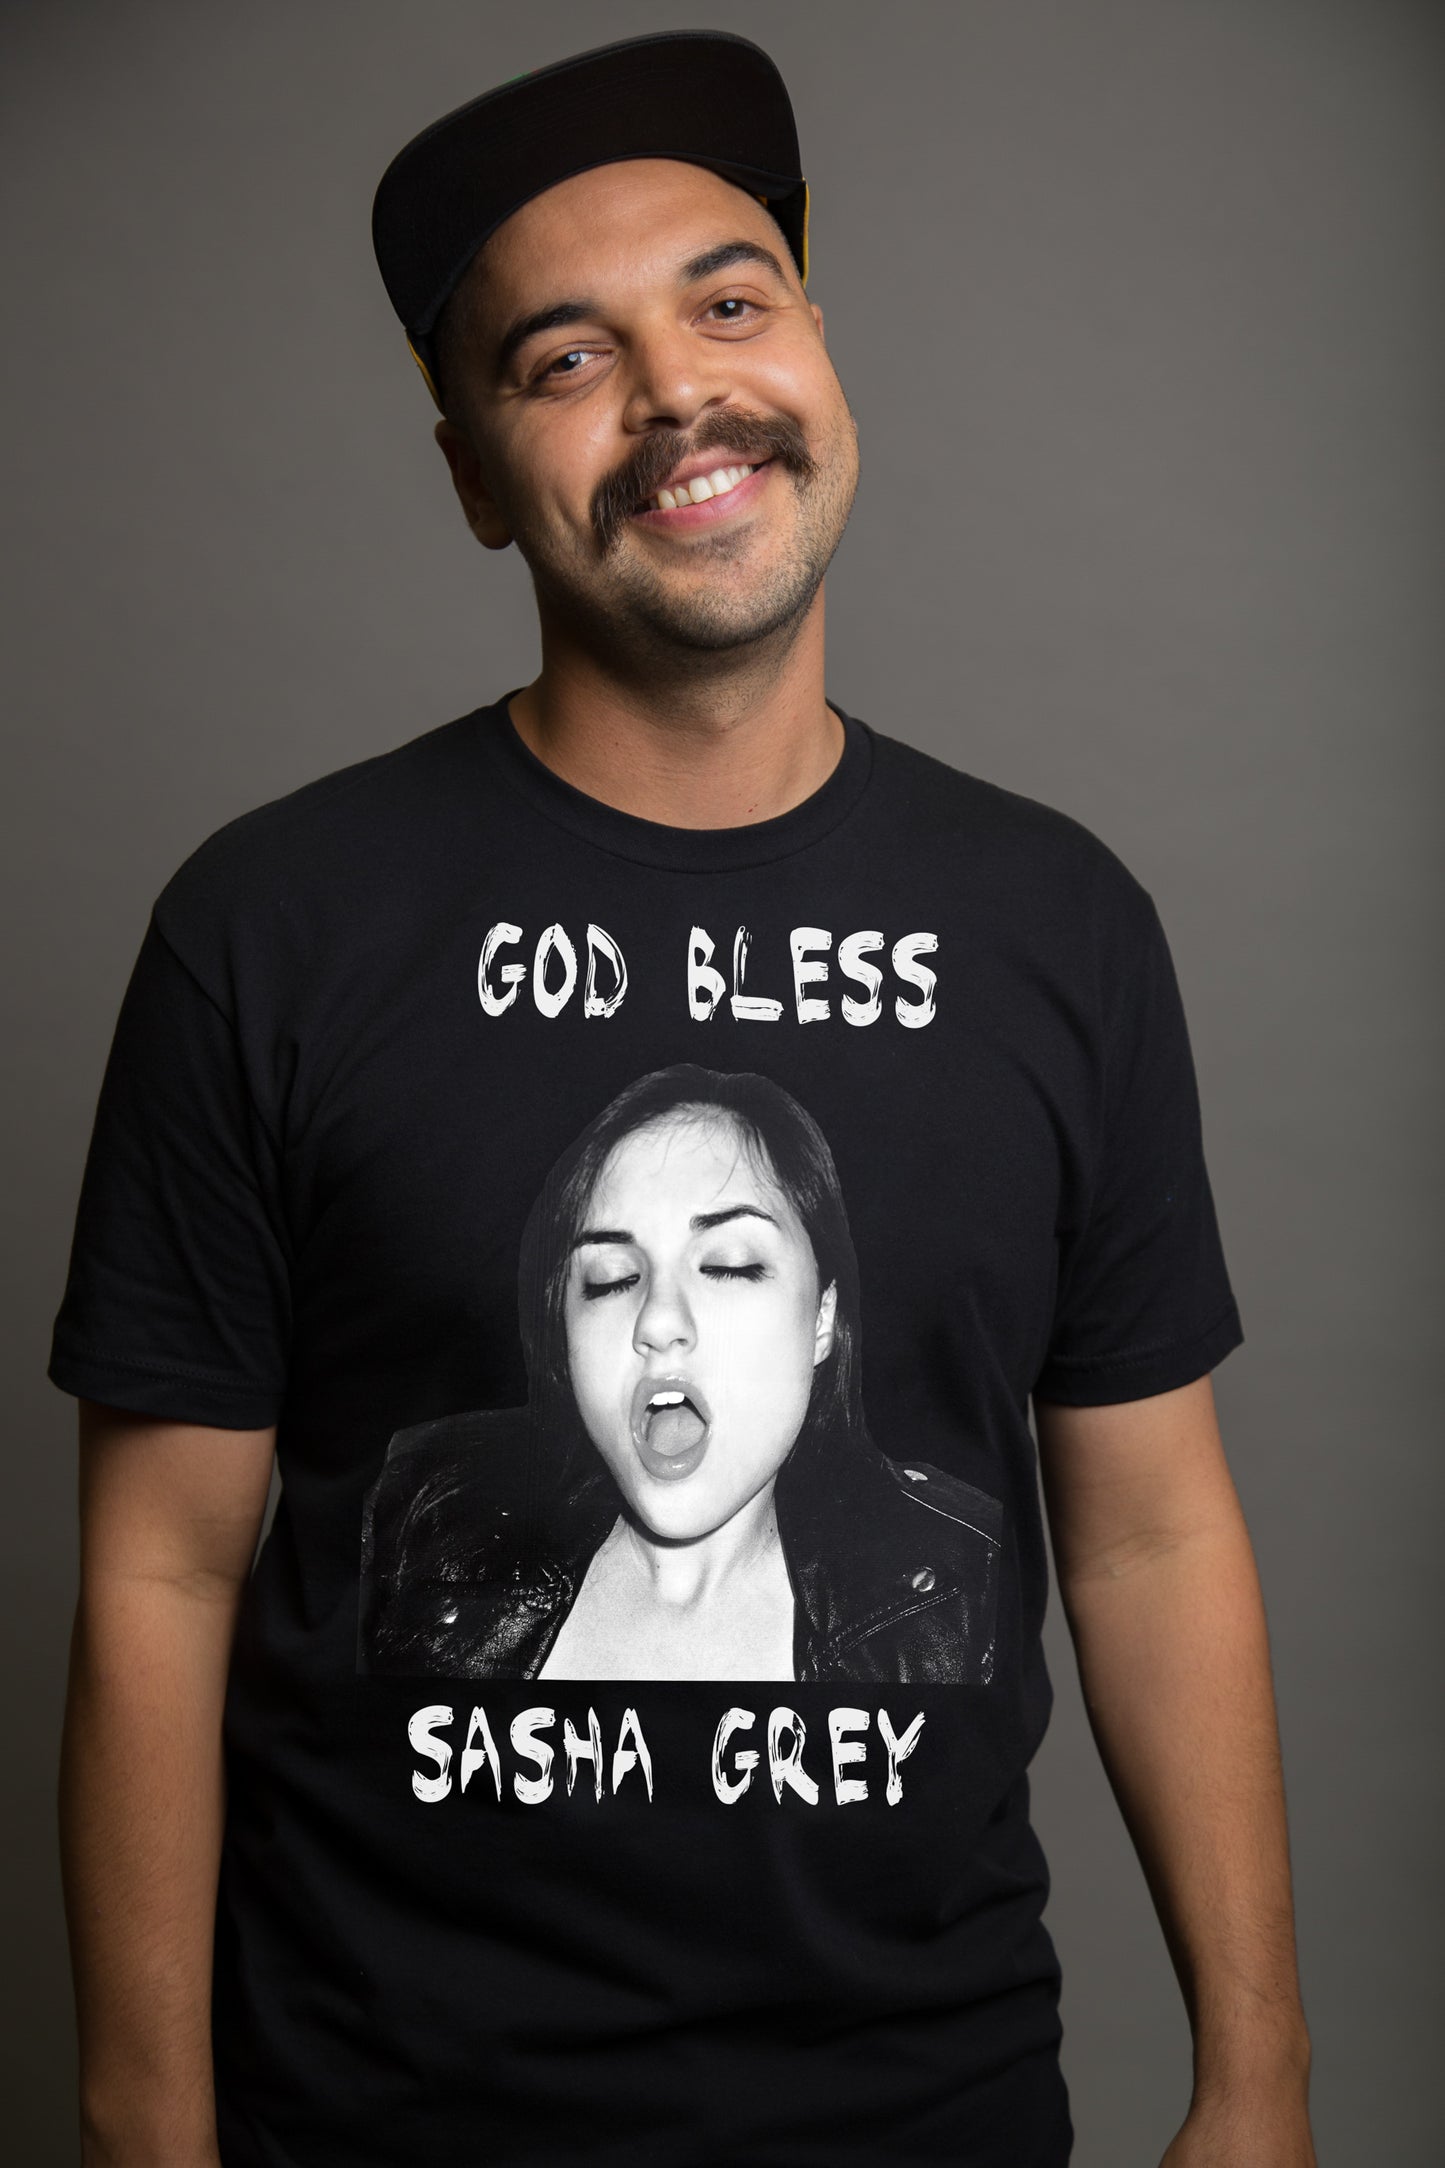 God Bless Sasha Grey Tshirt Black, Black God Bless Sasha Grey Tshirt , God Bless Sasha Grey, God Bless Sasha Gray, Sasha Grey Tshirt, Sasha Grey Collection